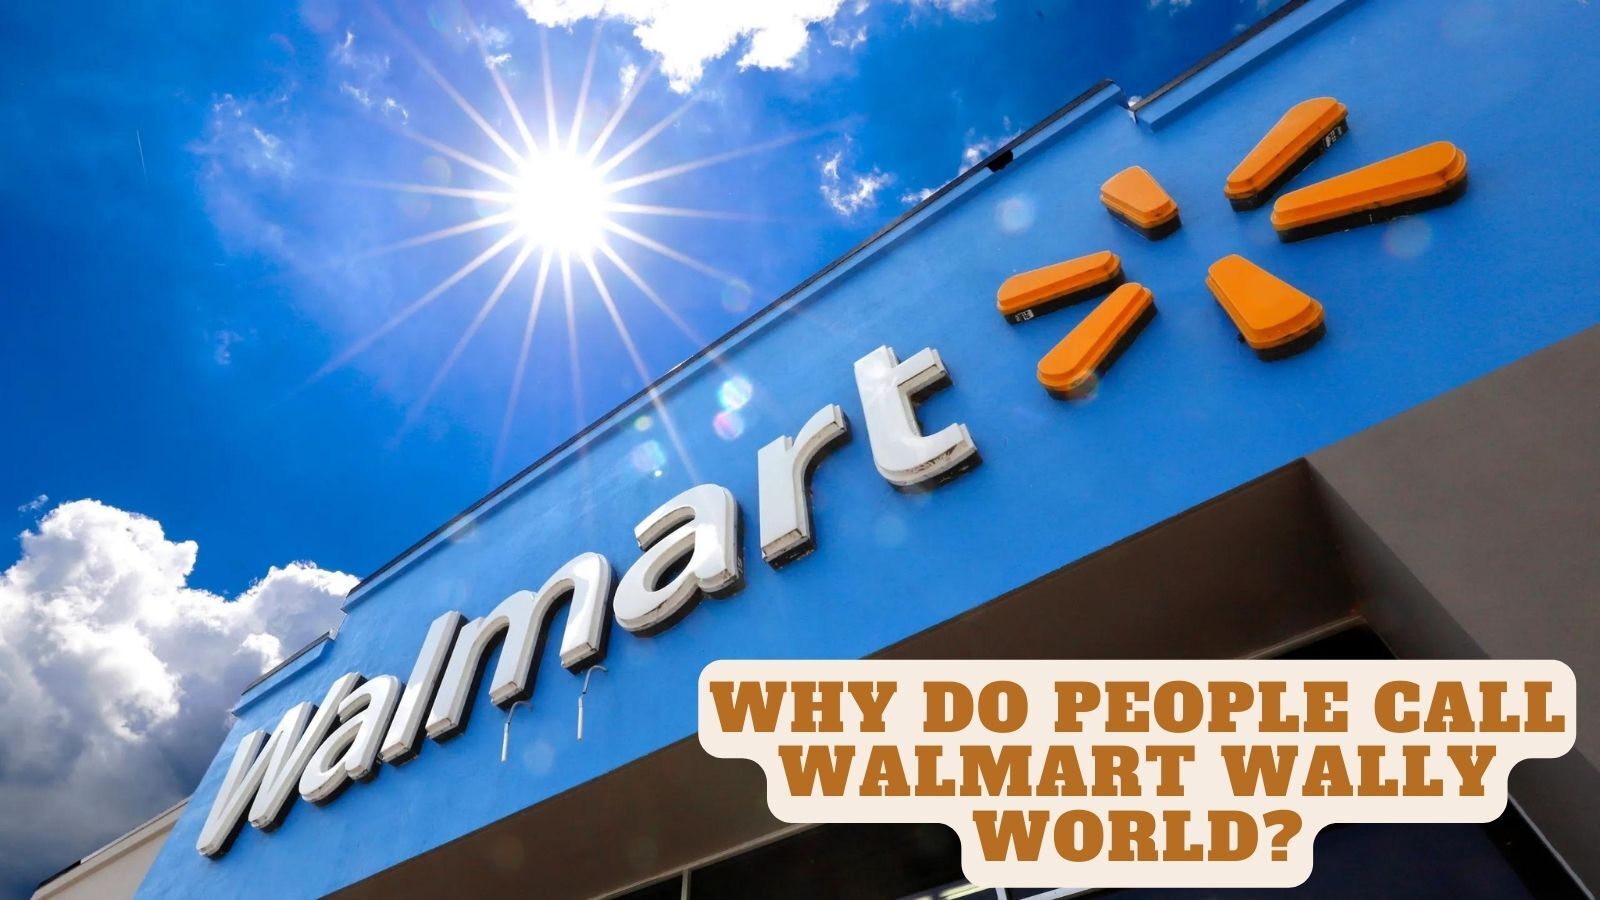 Why Do People Call Walmart "Wally World"?